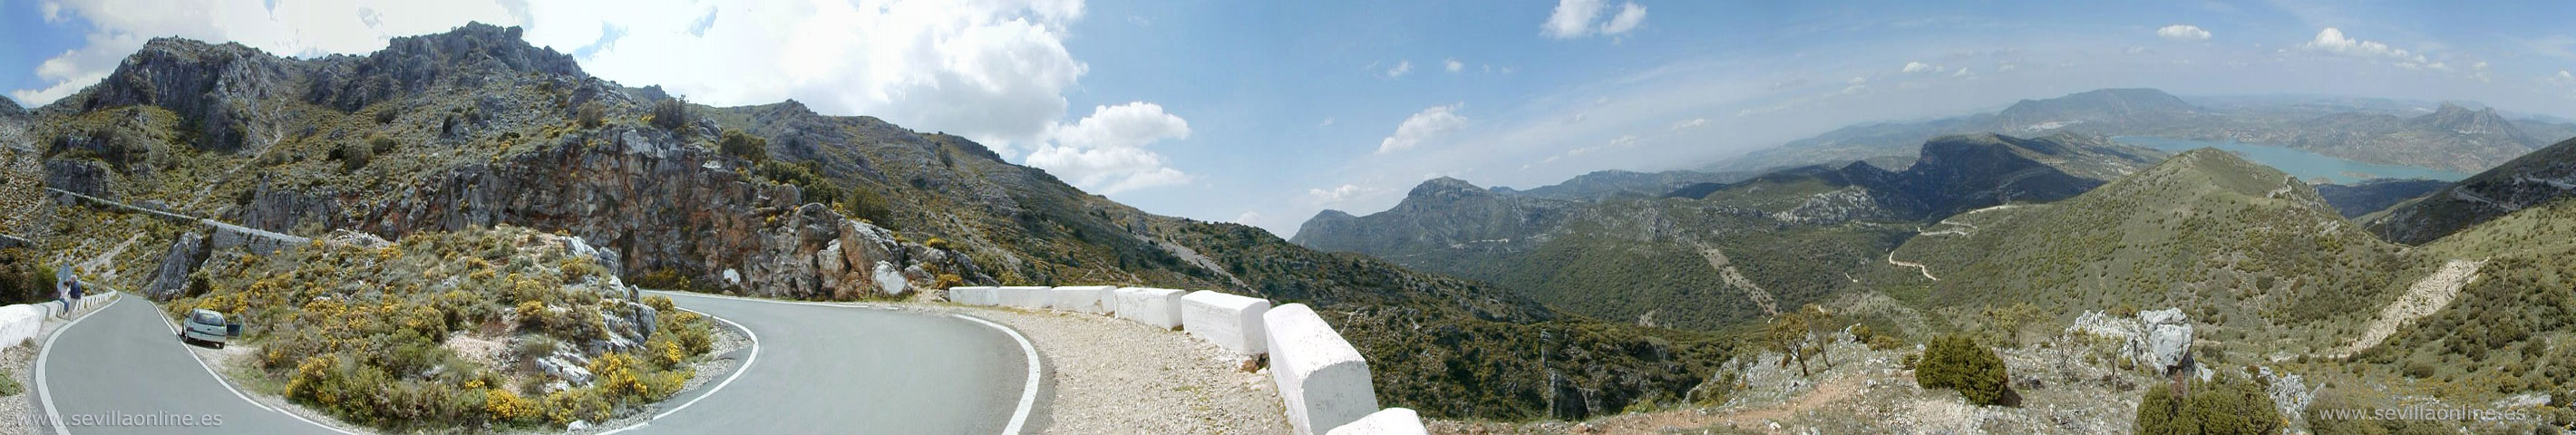 Panoramic Naturpark Sierra de Grazalema, Cadiz - Andalusien, Spanien.